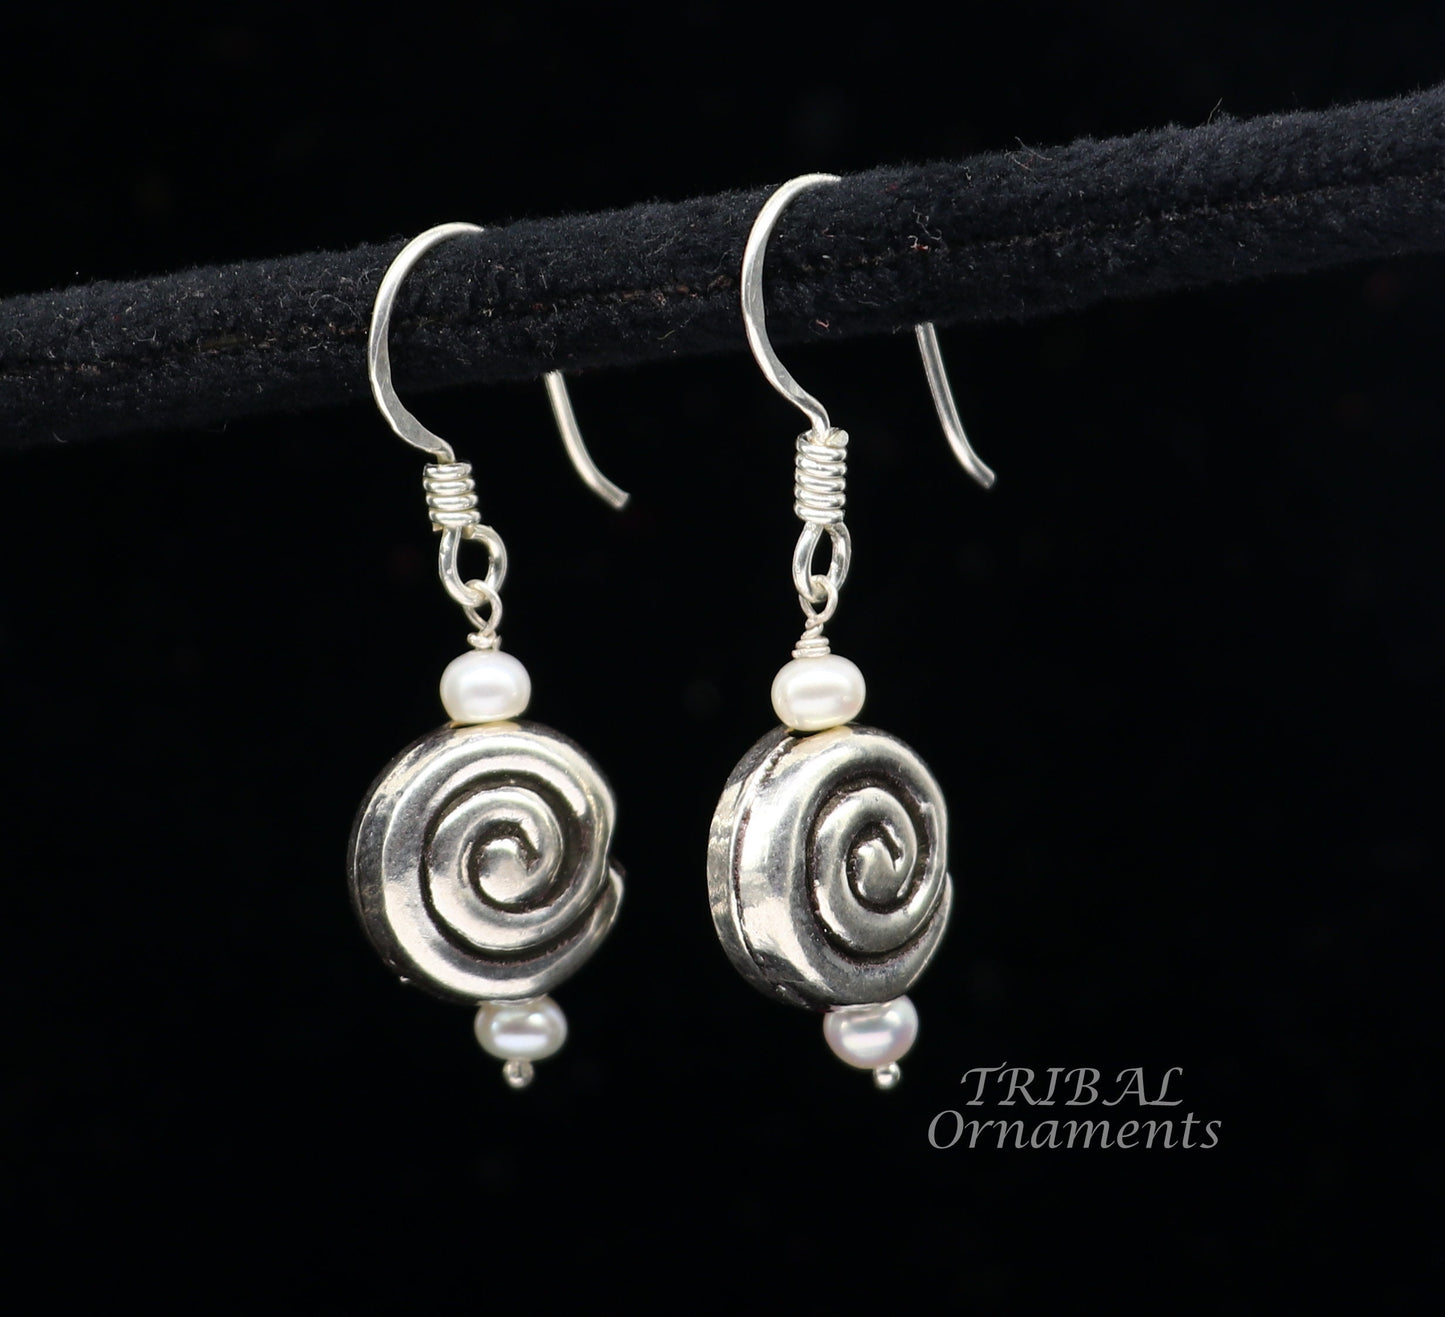 925 sterling silver handmade hook earrings, fabulous hanging pretty bells drop dangle earrings tribal ethnic jewelry from India s1088 - TRIBAL ORNAMENTS